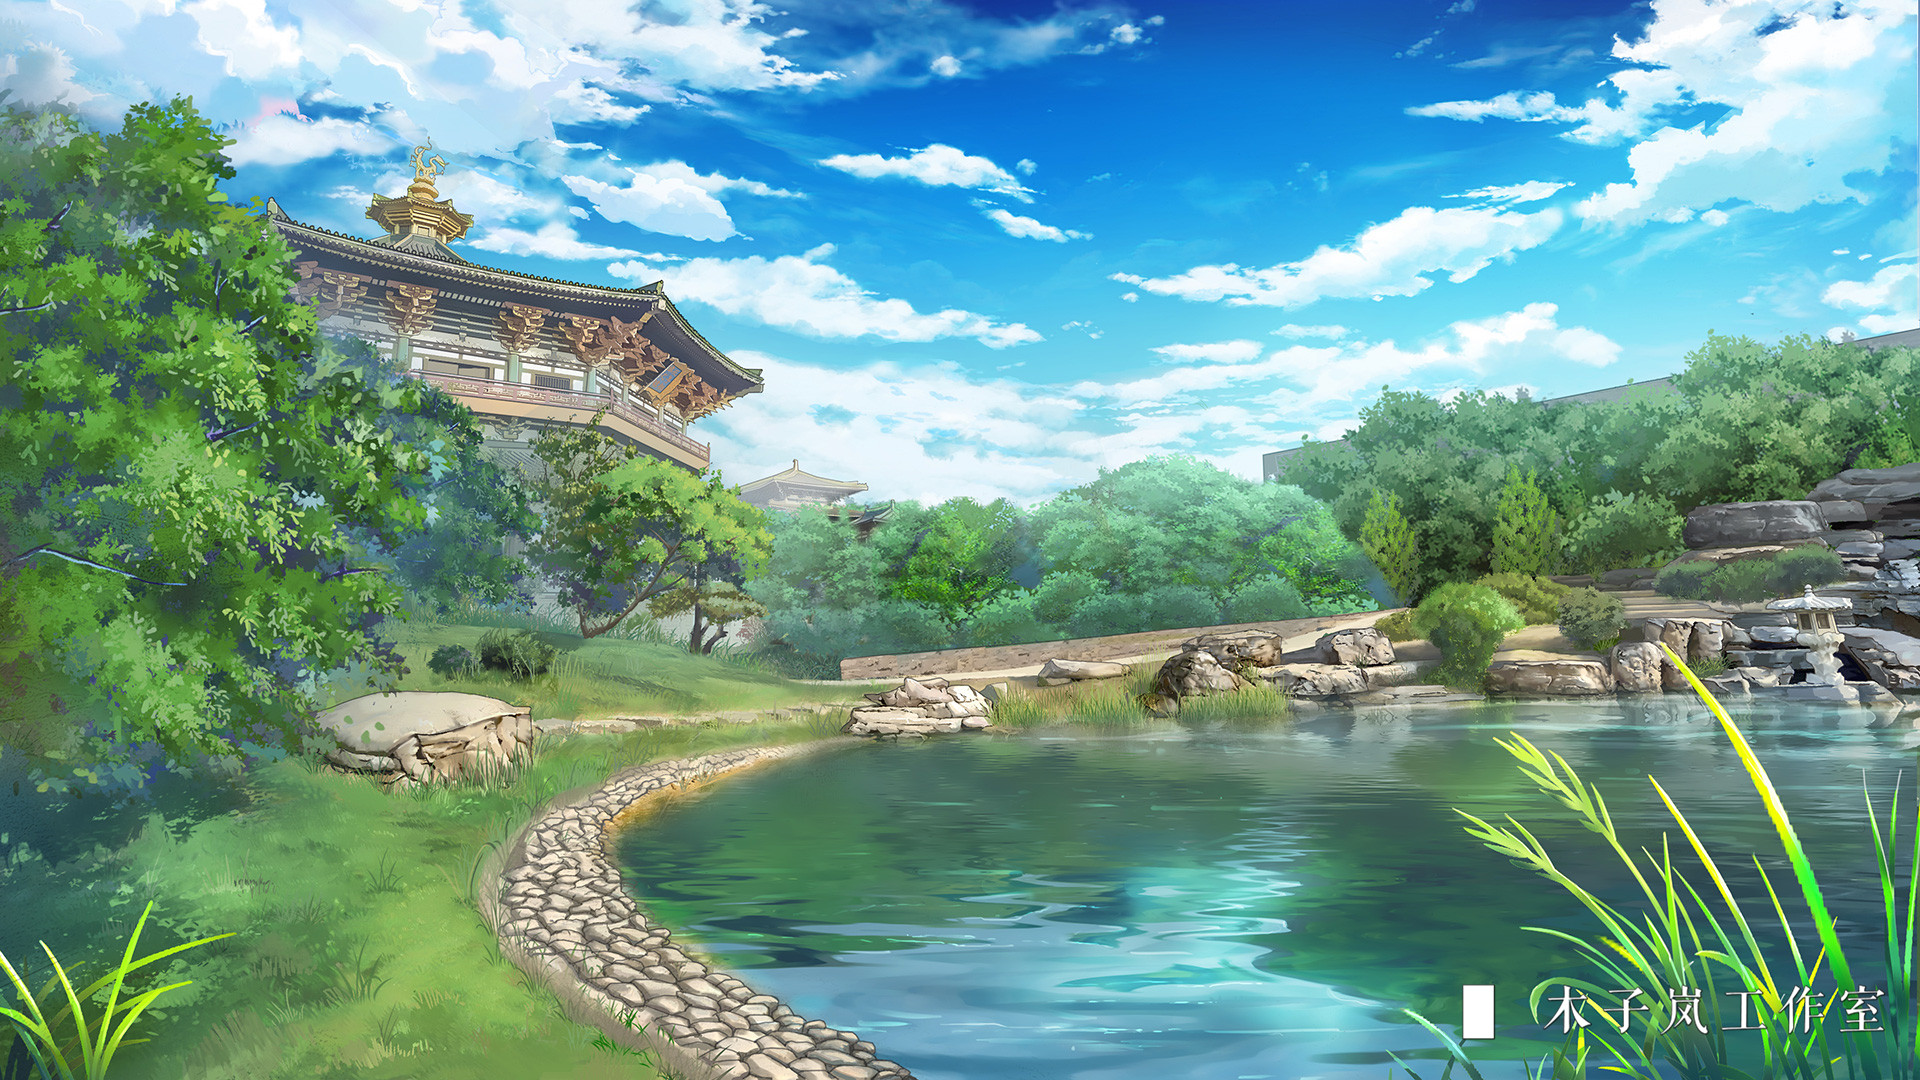 Light on the Lake [1920x1080] | Scenery background, Fantasy landscape, Anime  scenery wallpaper